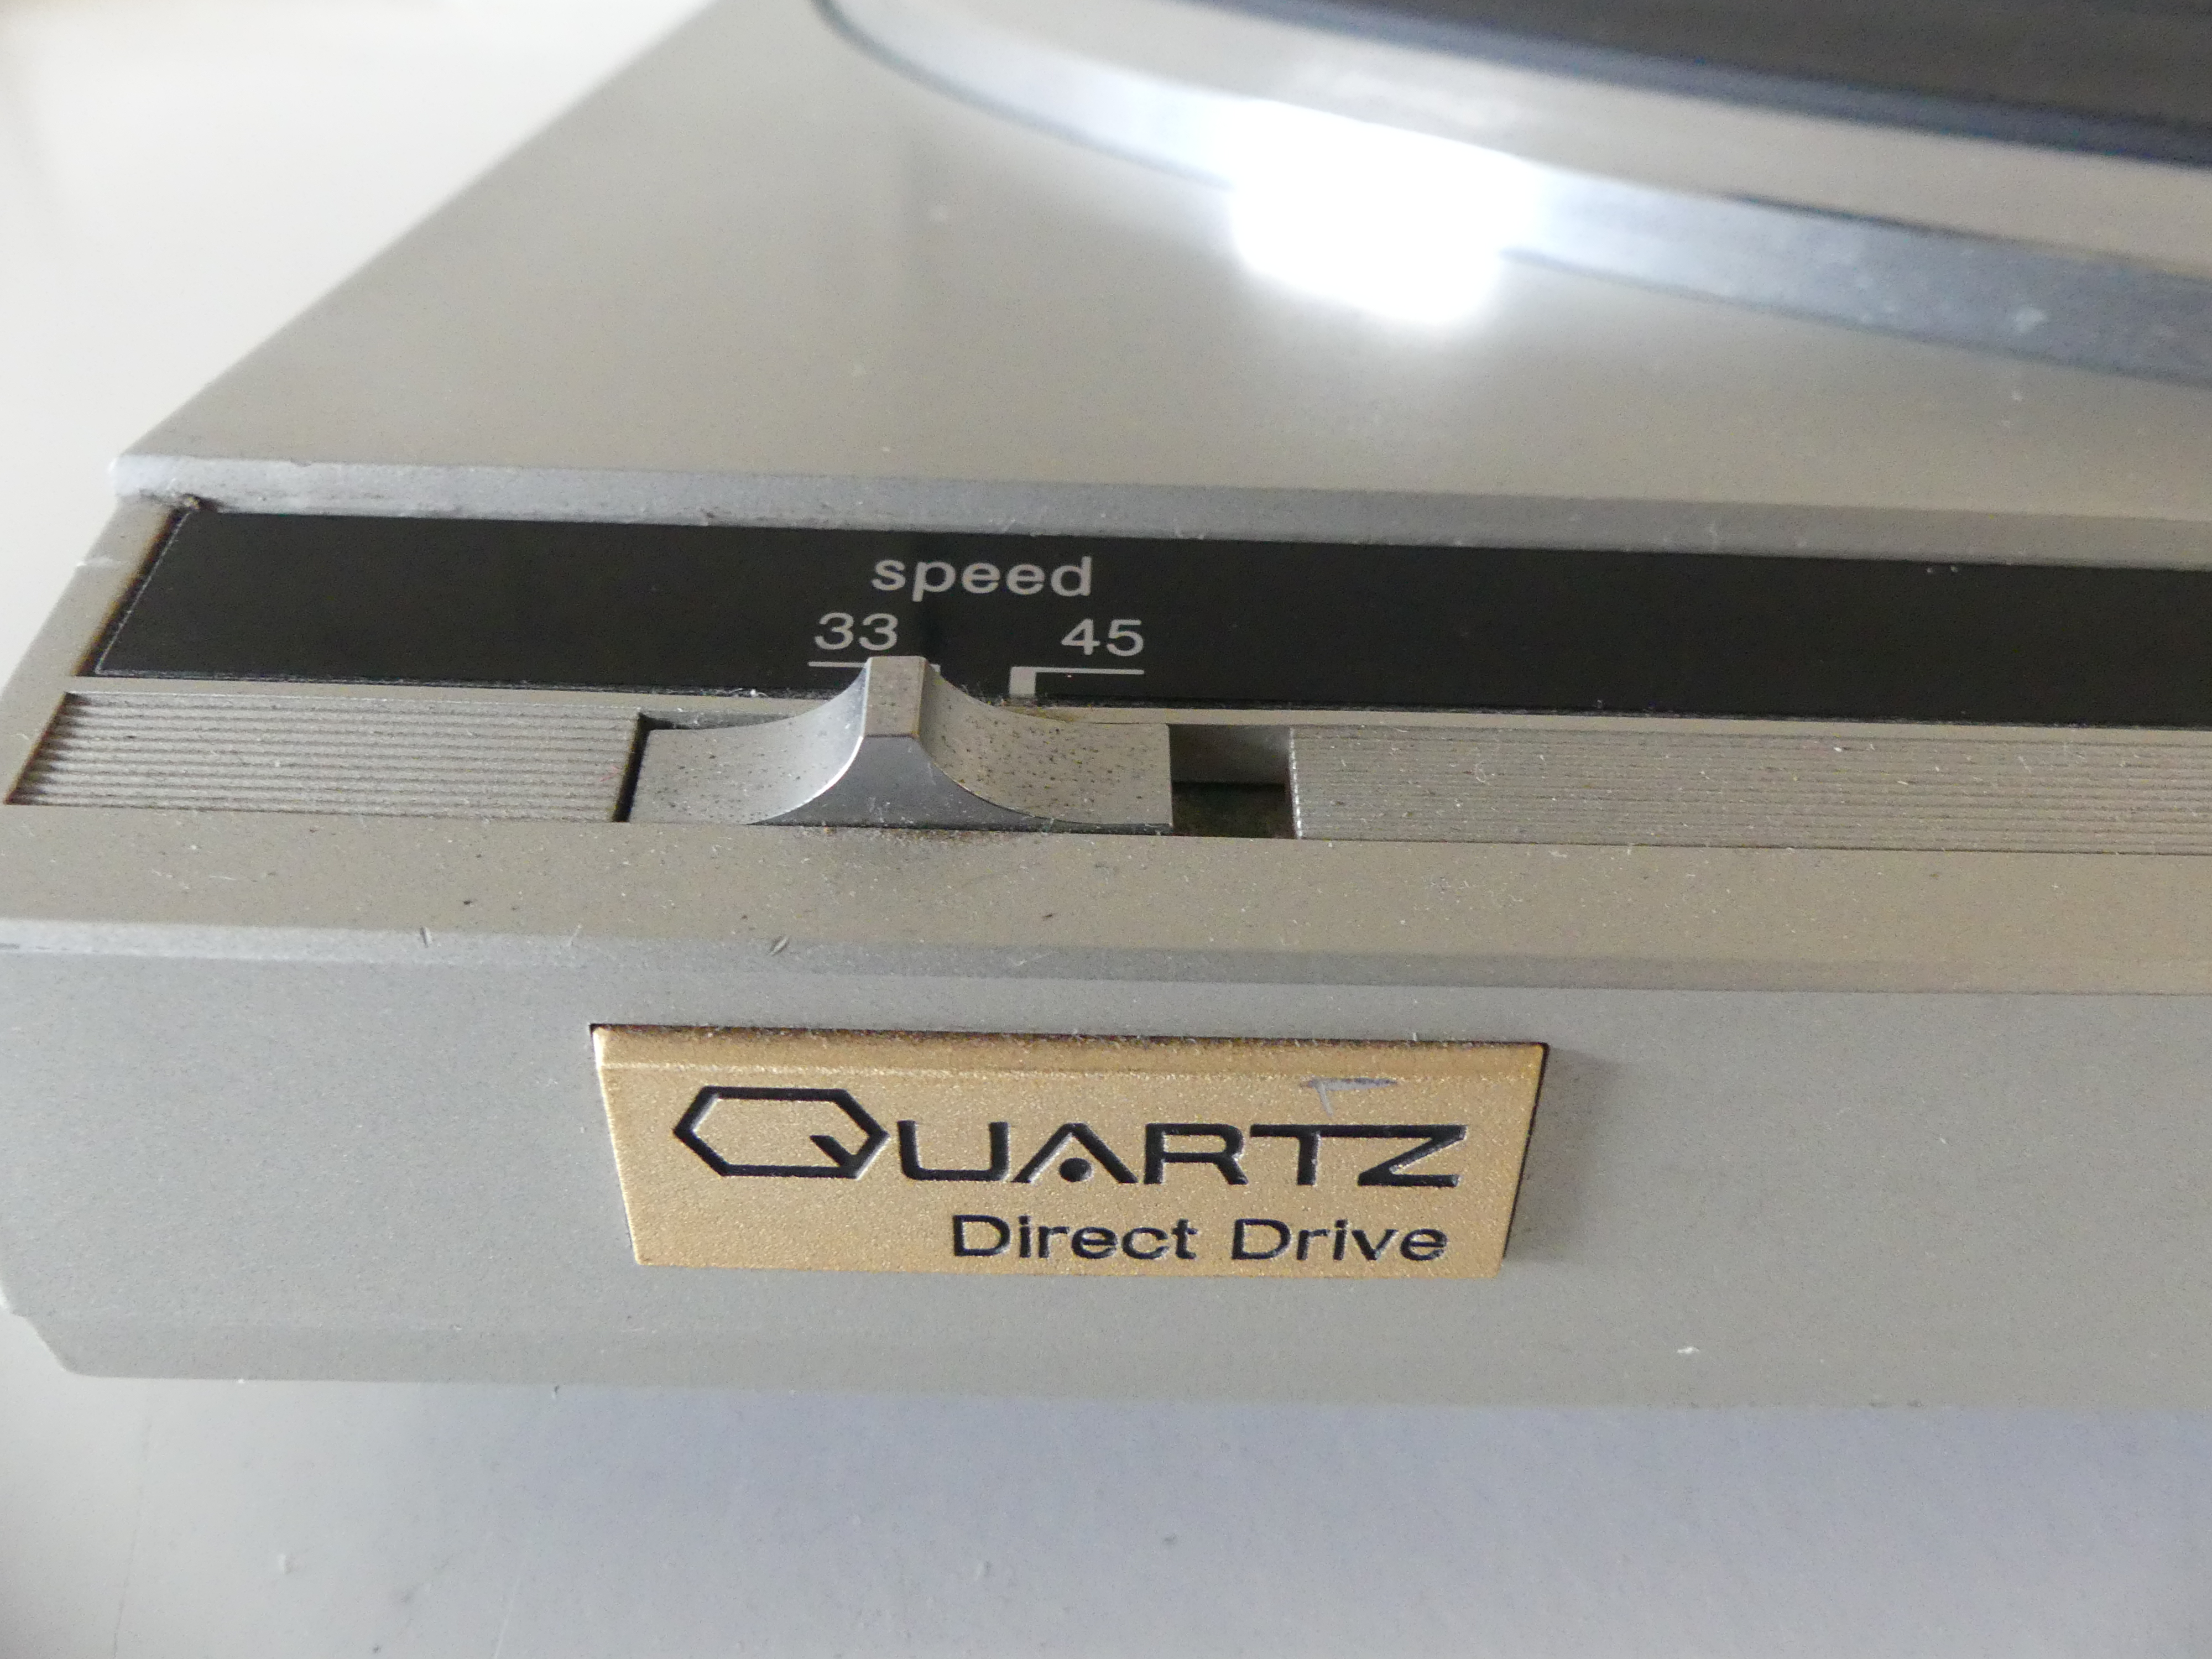 Technics platenspeler SL-Q210 Quartz Direct Drive